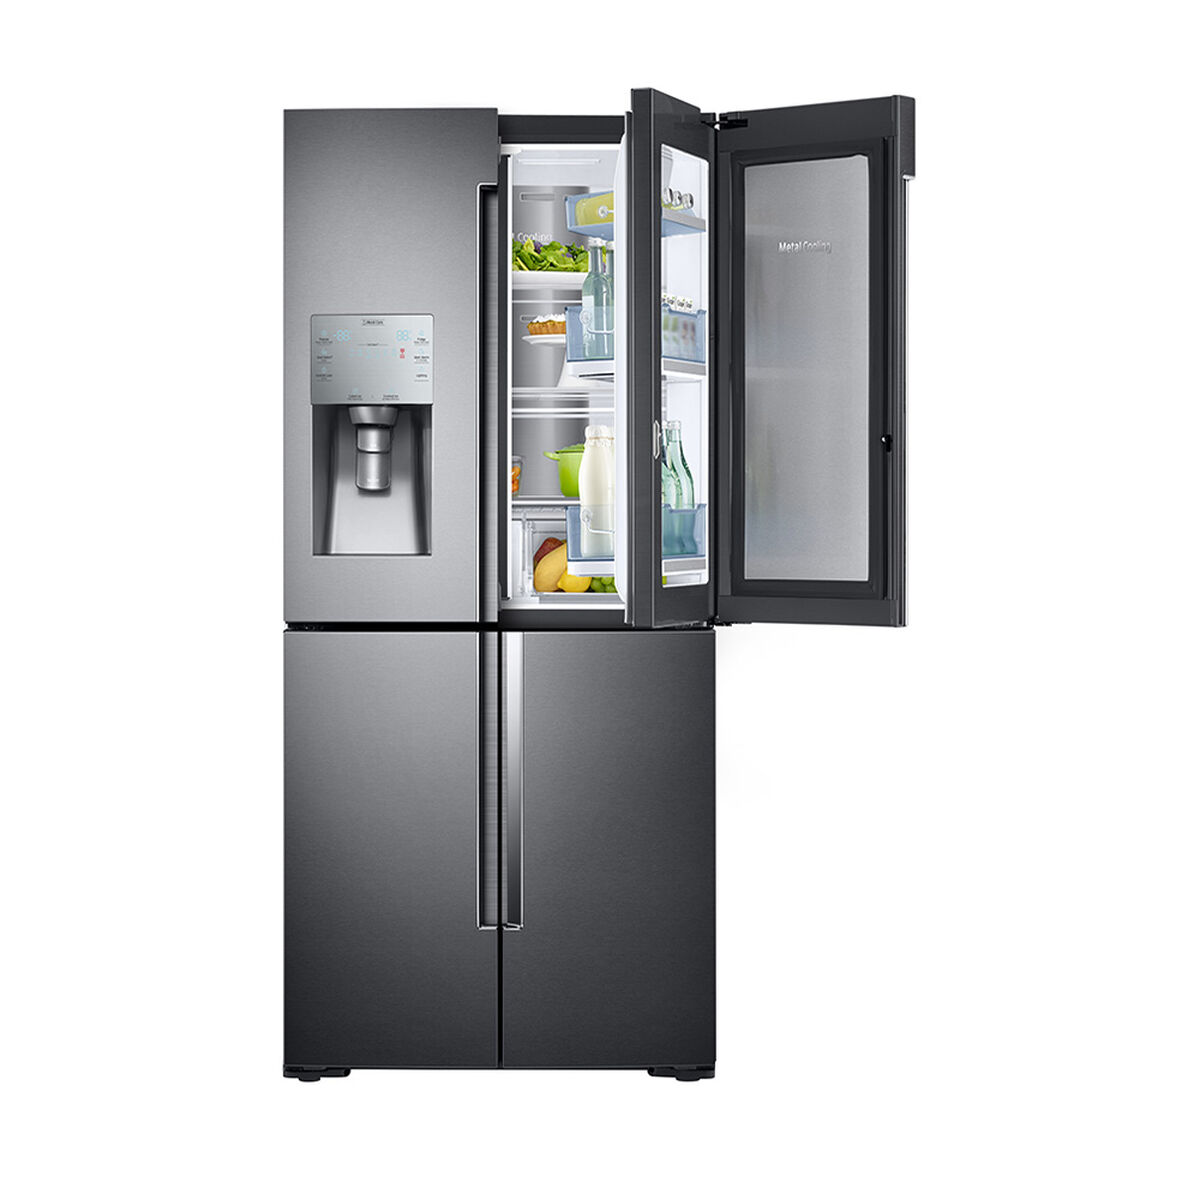 Refrigerador Side By Side Samsung RF28K9380SG 690 lts.